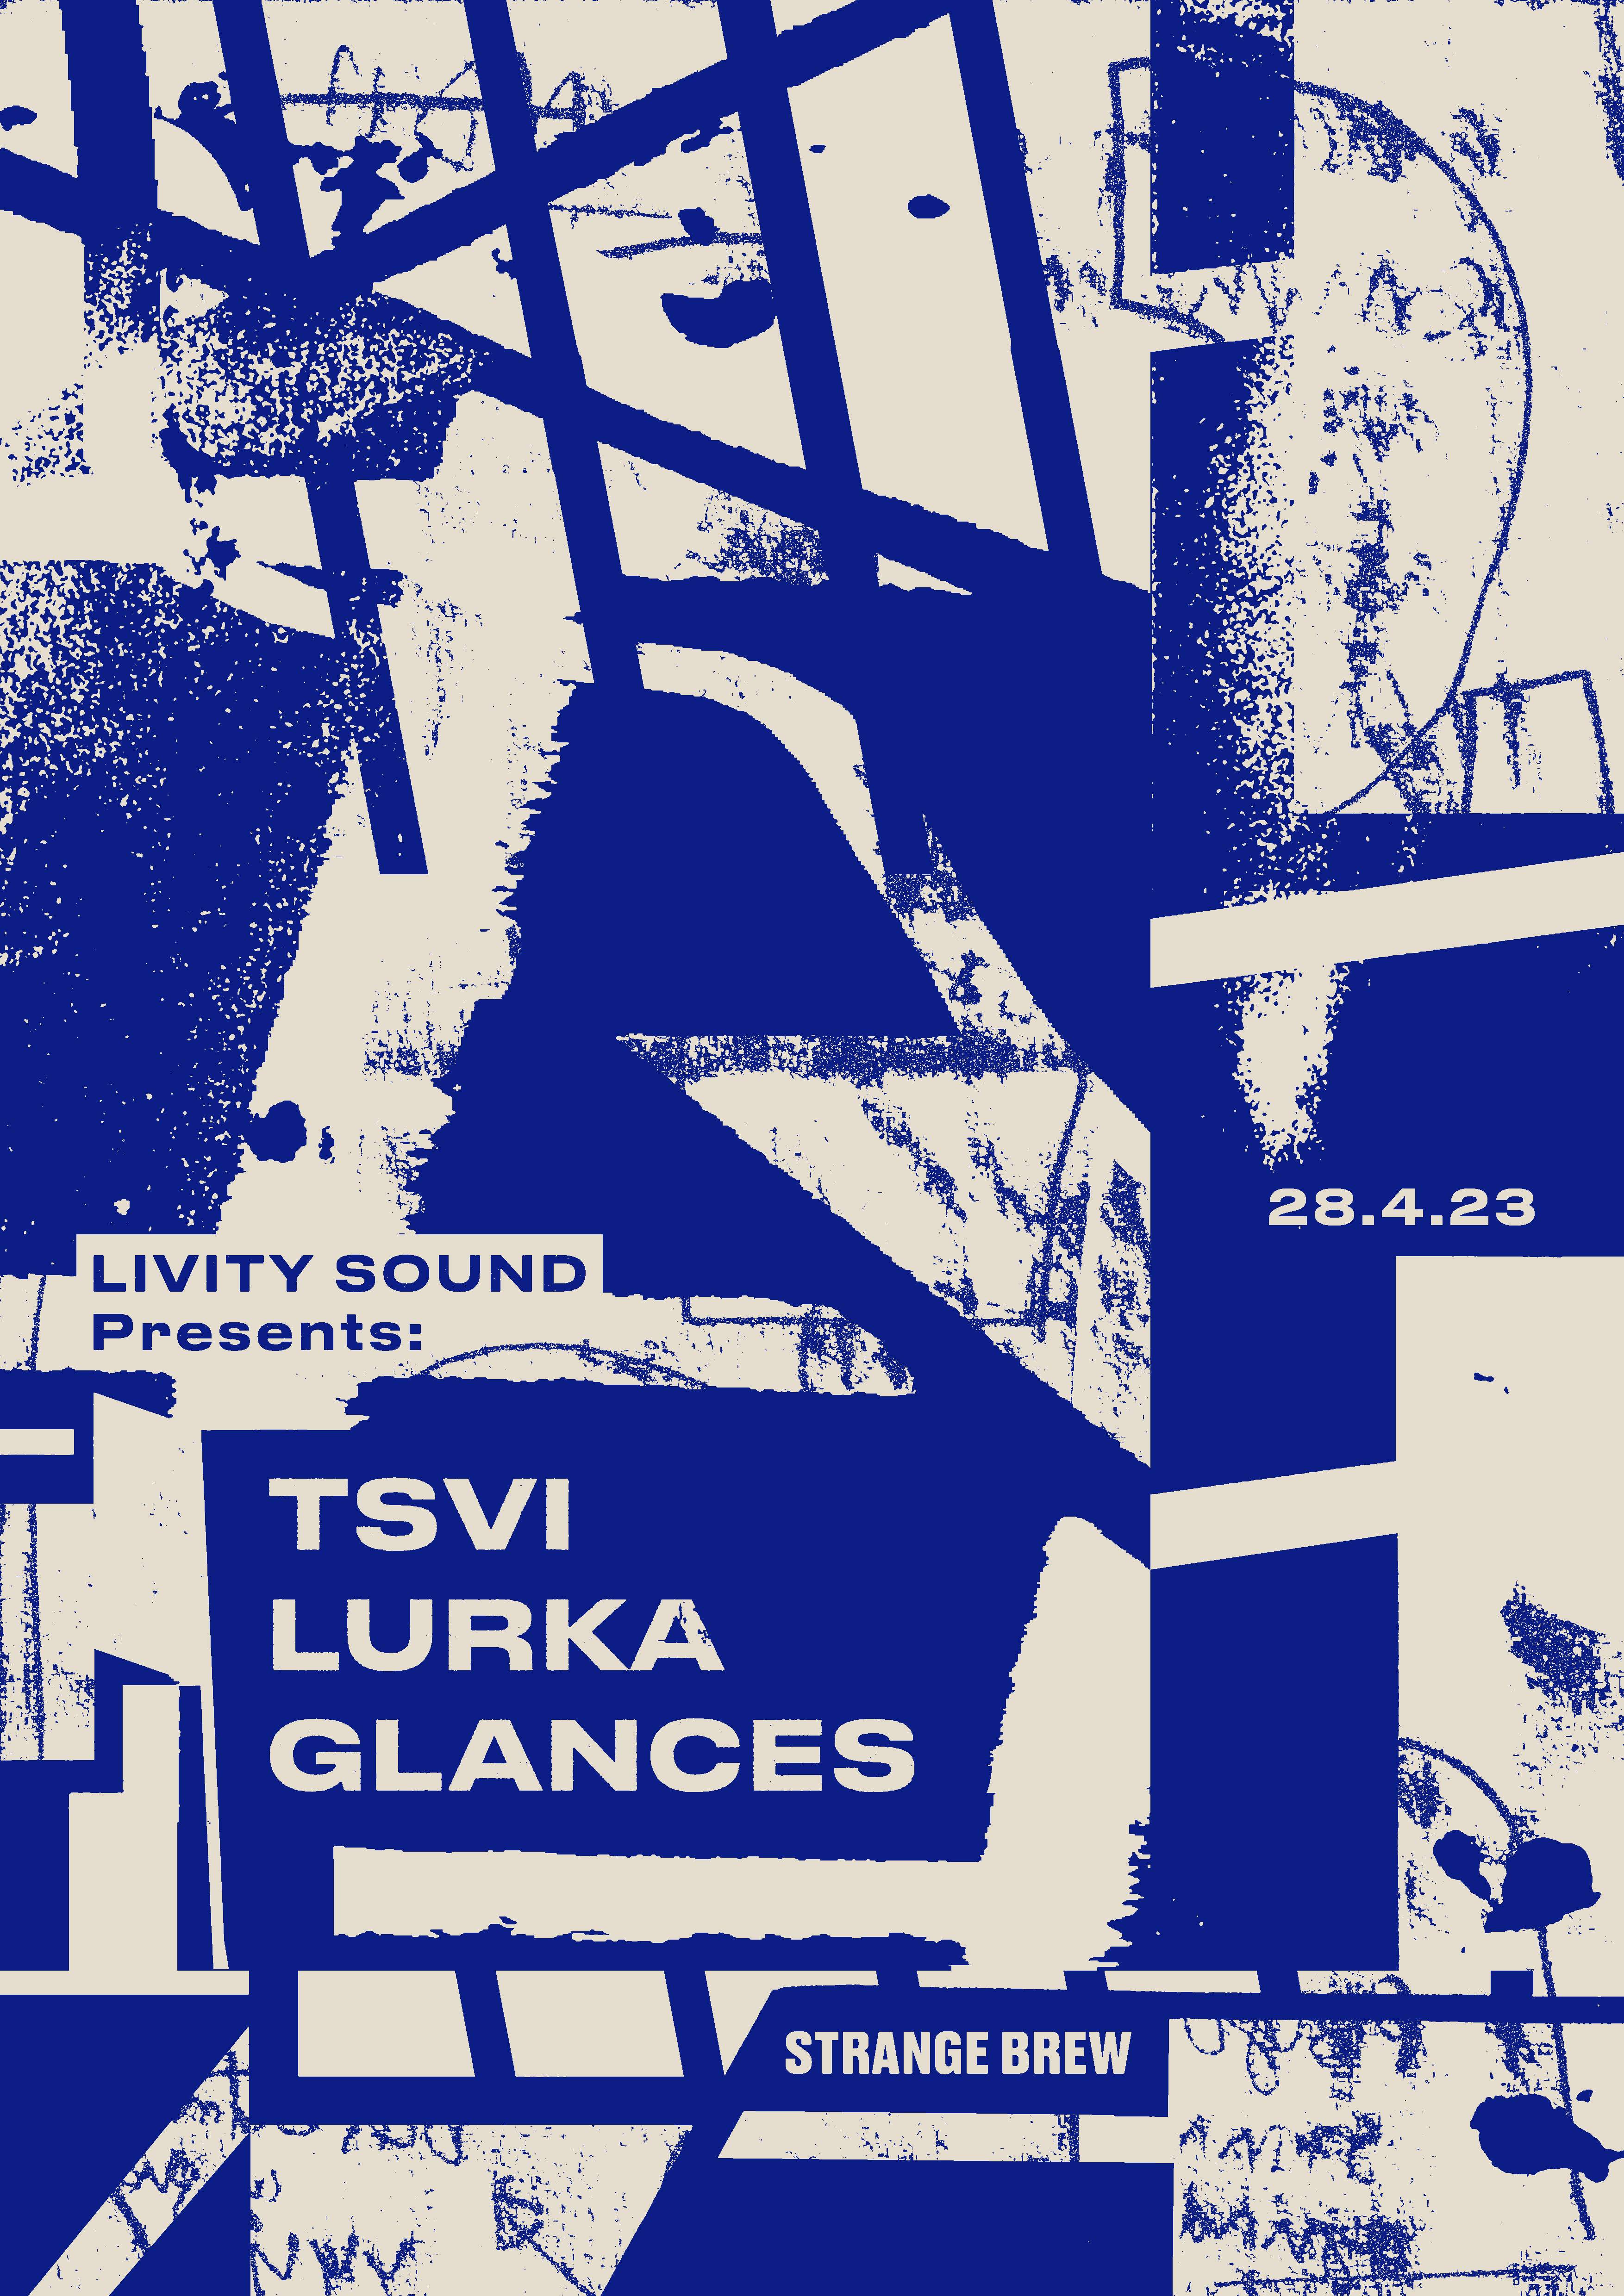 Livity Sound with TSVI, Lurka, Glances - フライヤー表